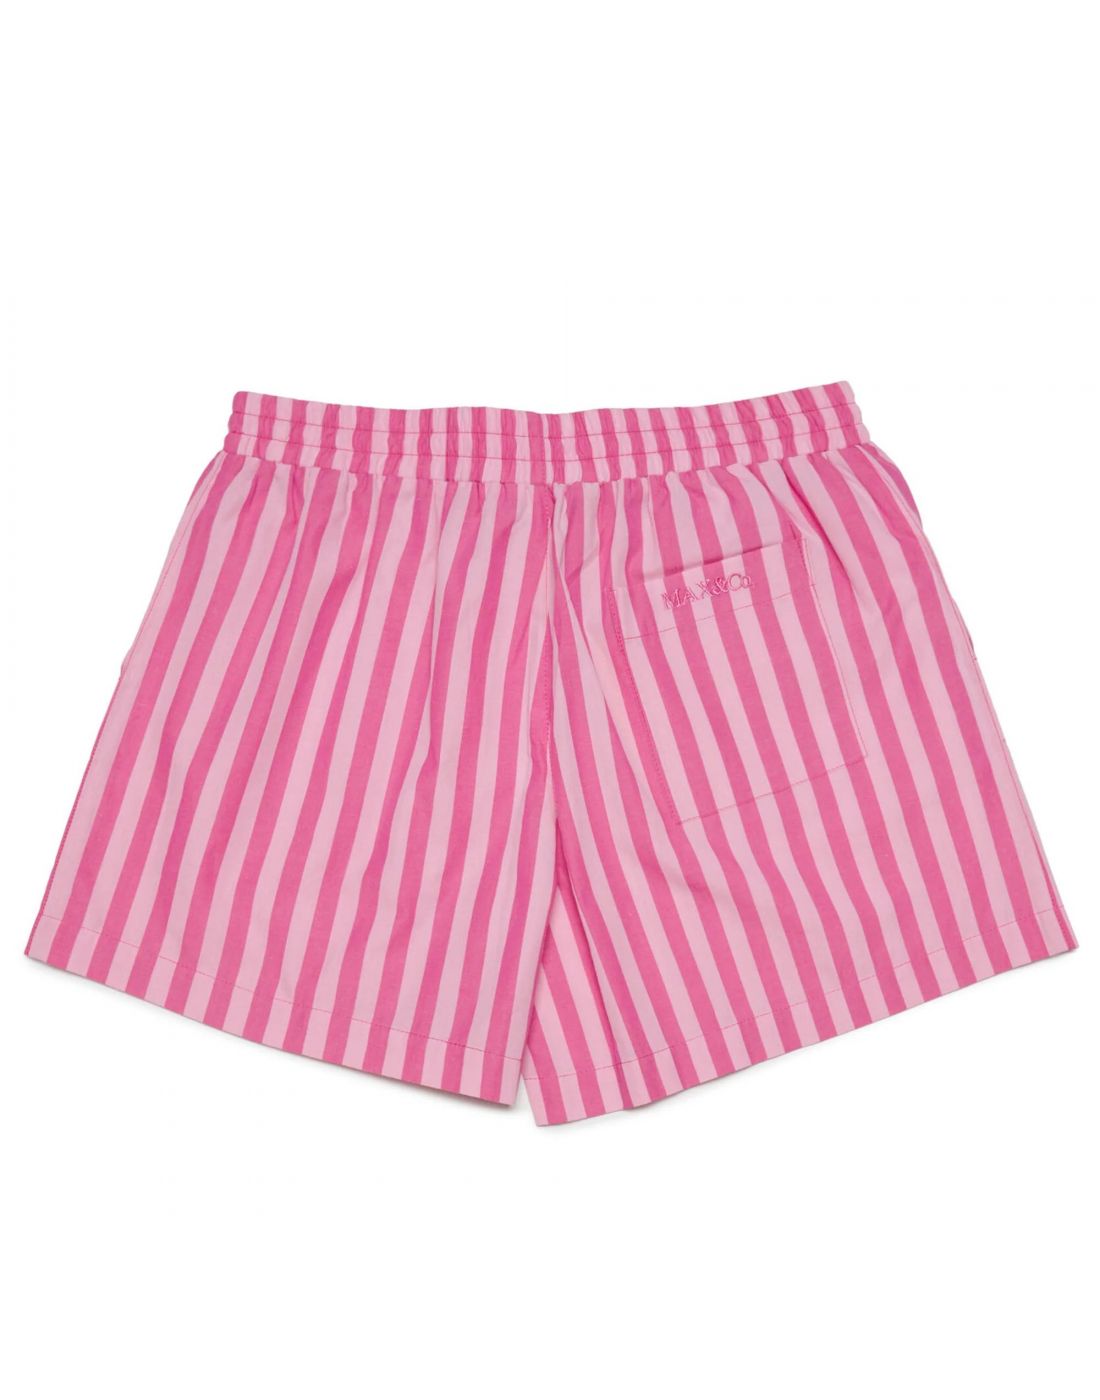 Max&co Striped Poplin Shorts